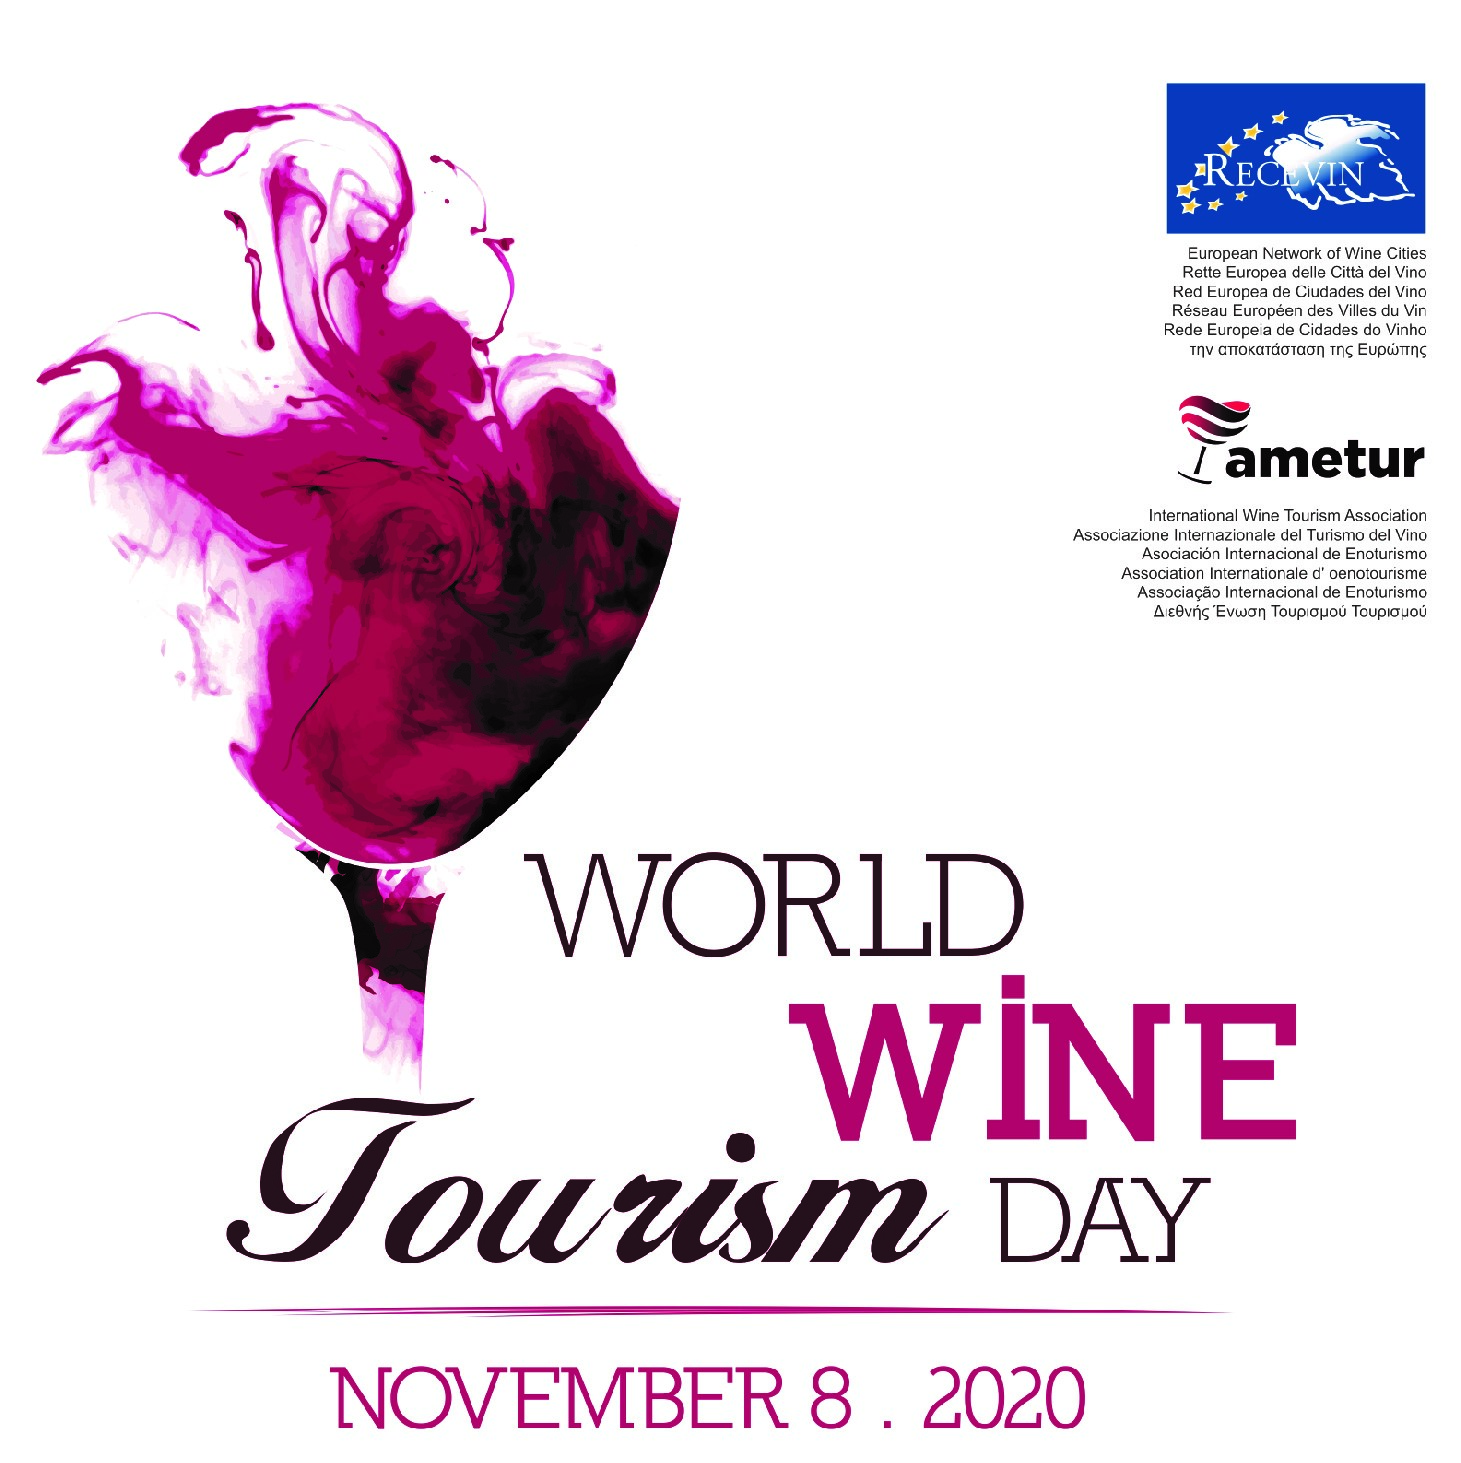 World Wine Tourism Day